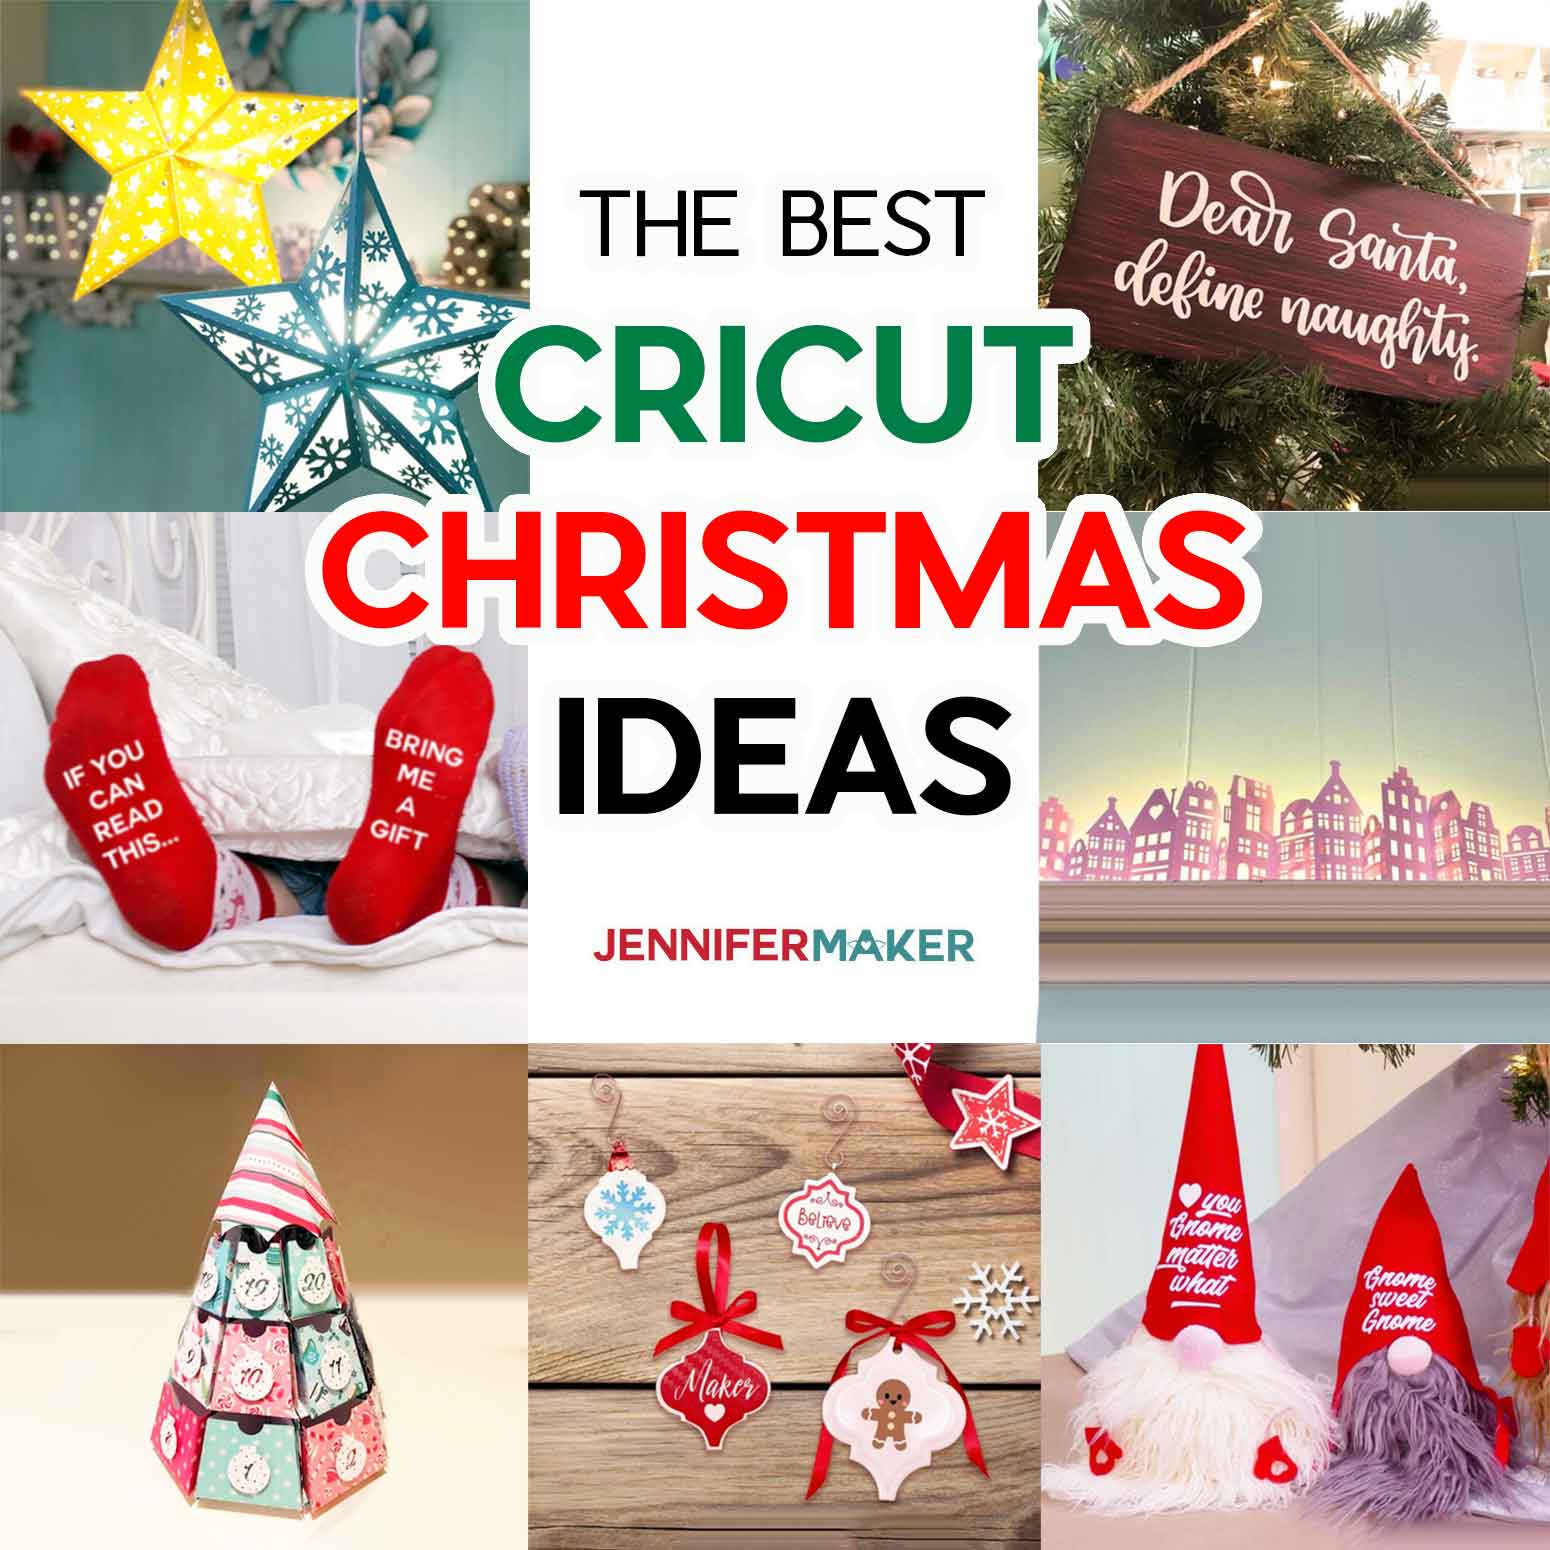 Cricut Christmas Ideas: Free SVGs & Tutorials